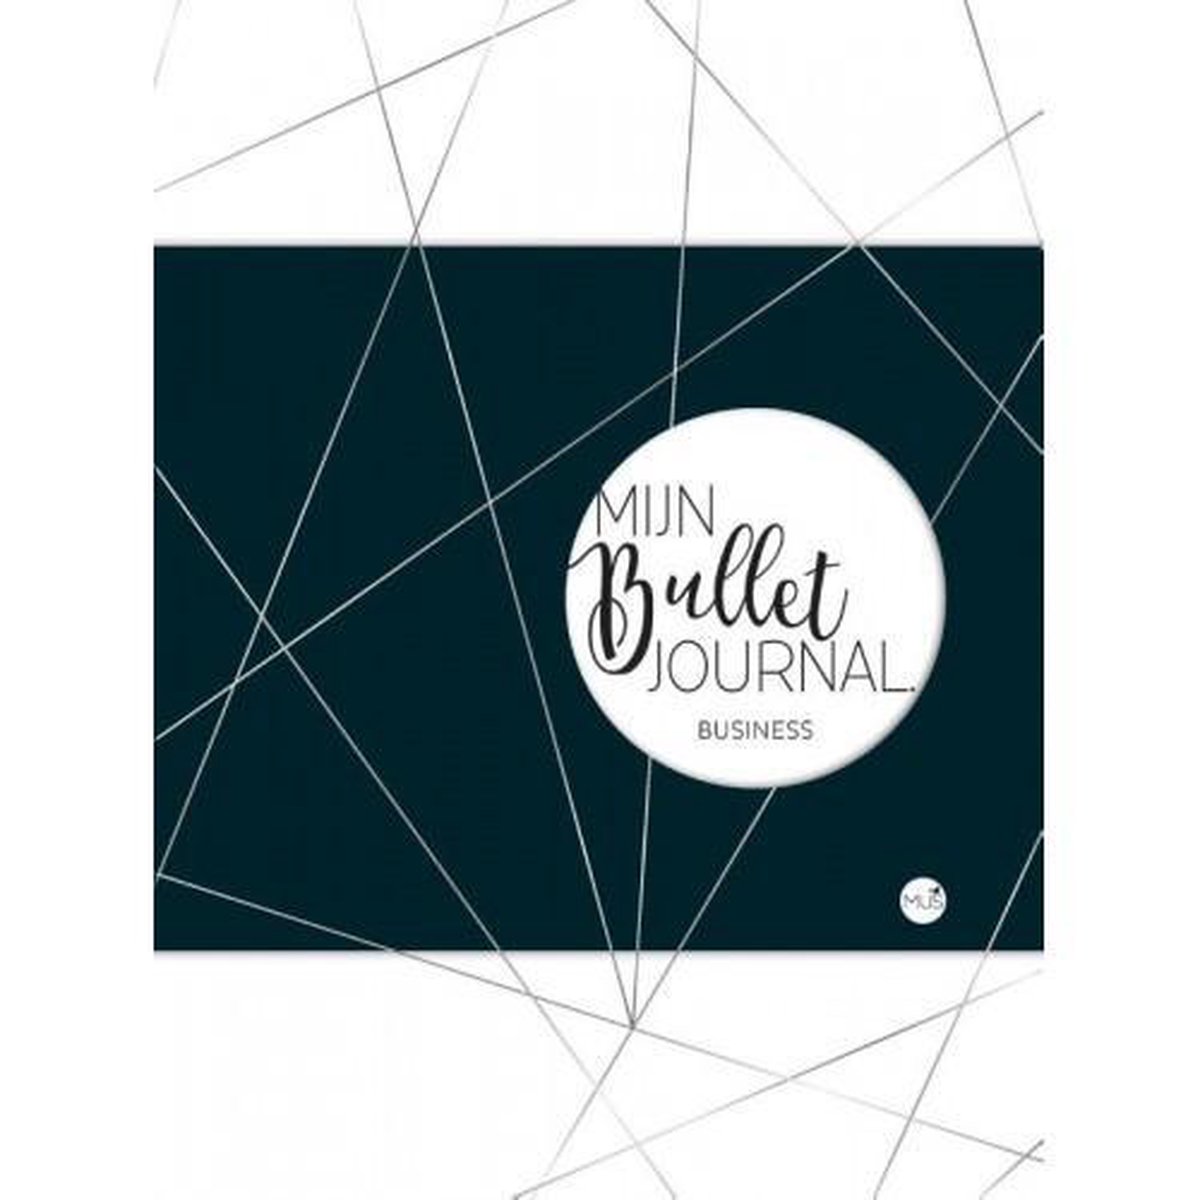 Business Bullet Journal LIGHT + Mijn Bullet Journal Stencils - Set van 15 + 1 Letter Stencil